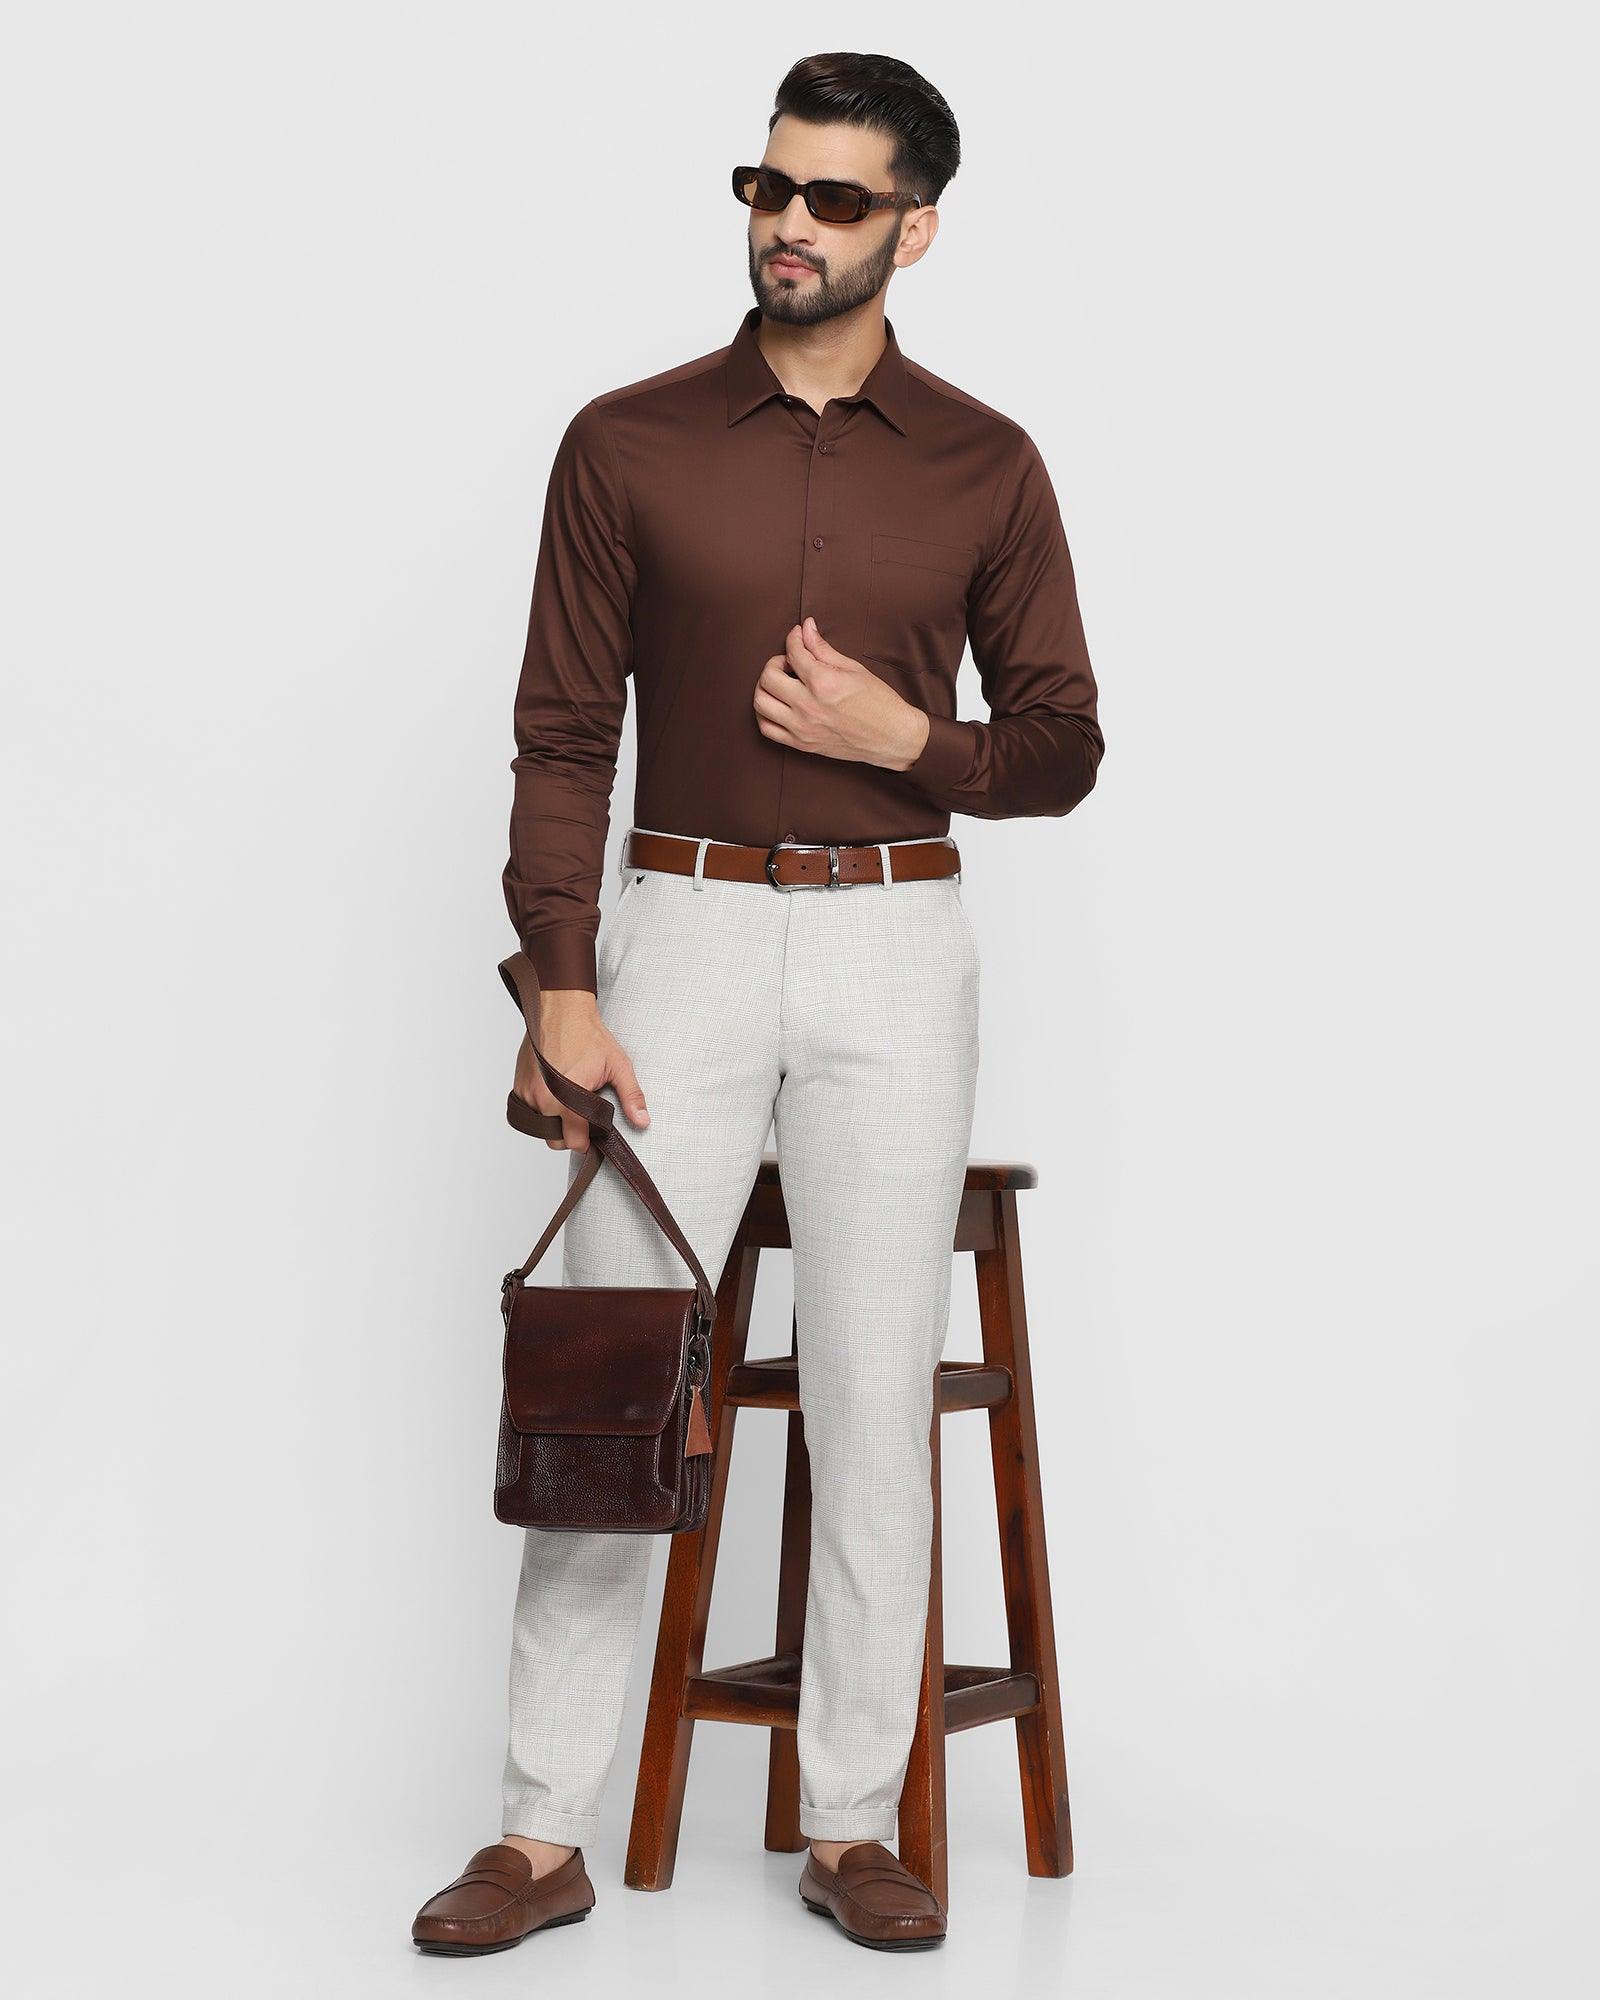 60 Dashing Formal Shirt And Pant Combinations For Men | Shirt and pants  combinations for men, Shirt outfit men, White shirt men